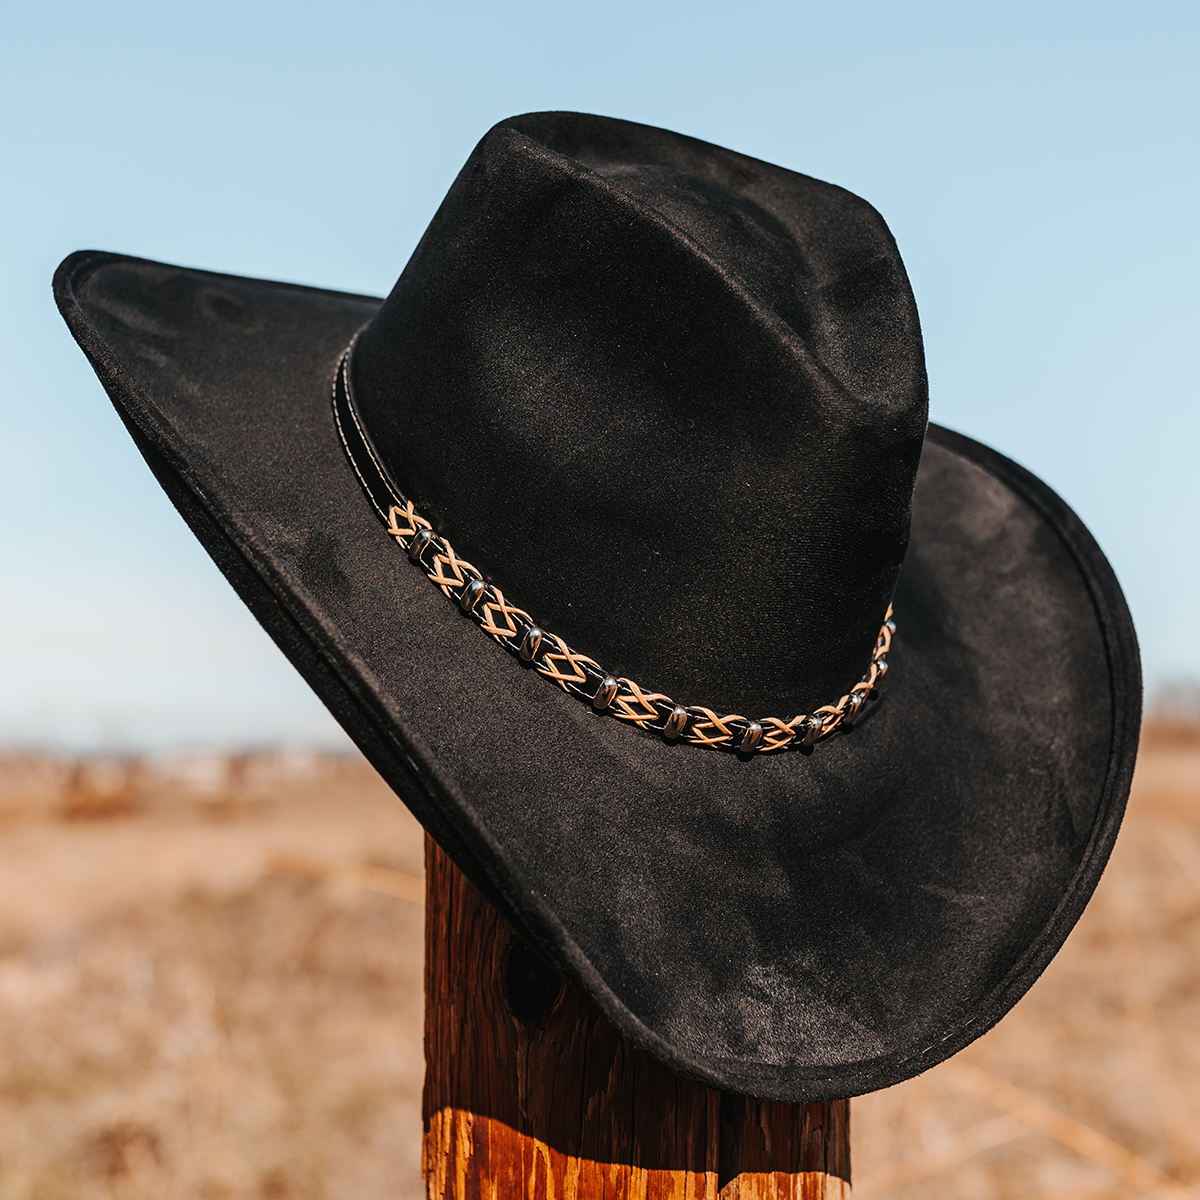 FREEBIRD Jones black western cowboy hat featuring teardrop crown, upturned-brim, and braided leather band